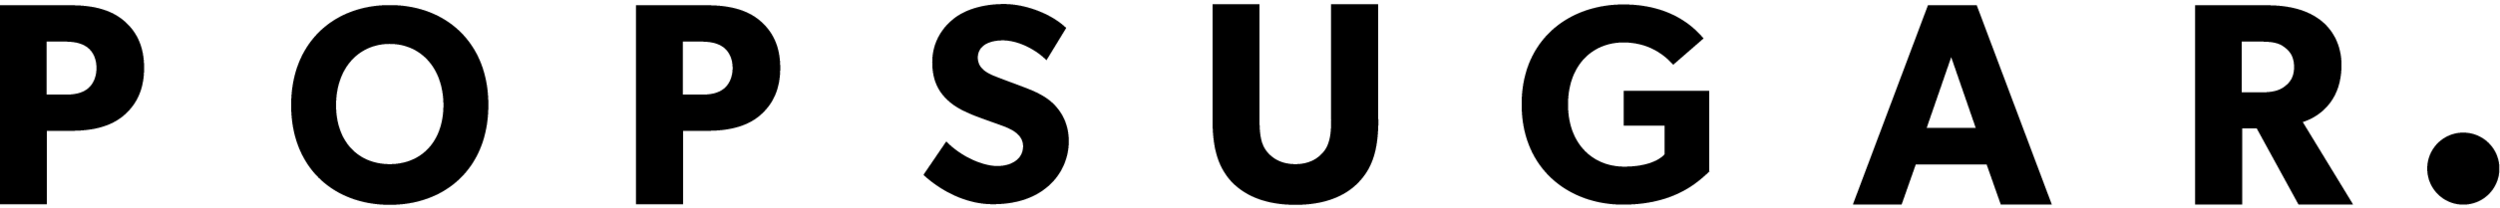 popsugar-vector-logo-01.png